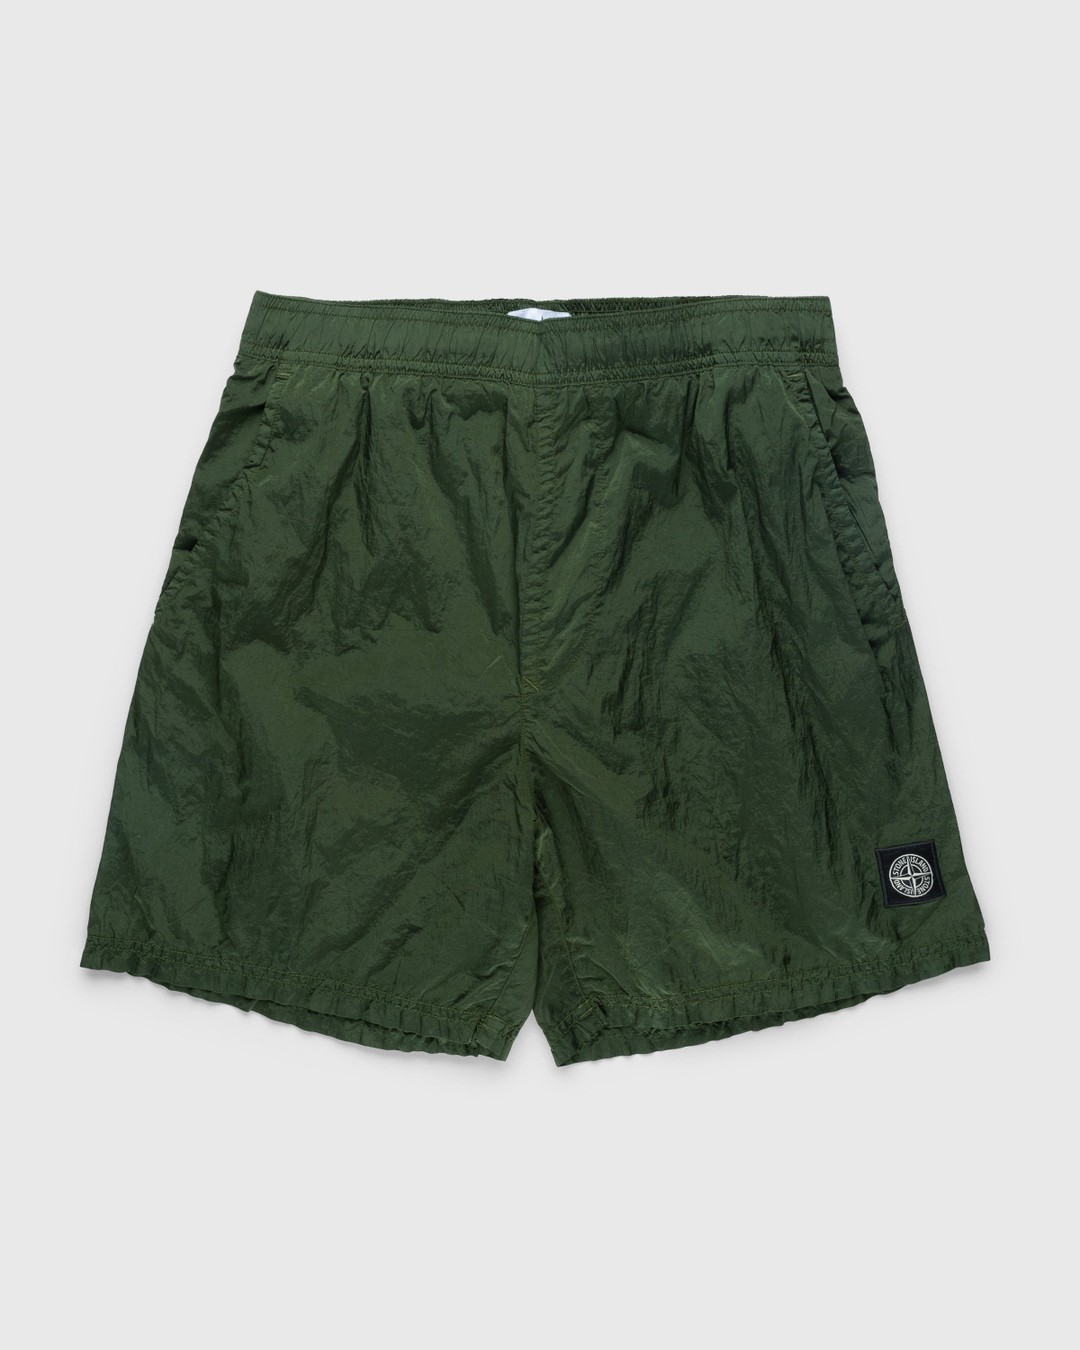 Stone Island – Nylon Metal Swim Shorts Olive - Swimwear - Green - Image 1